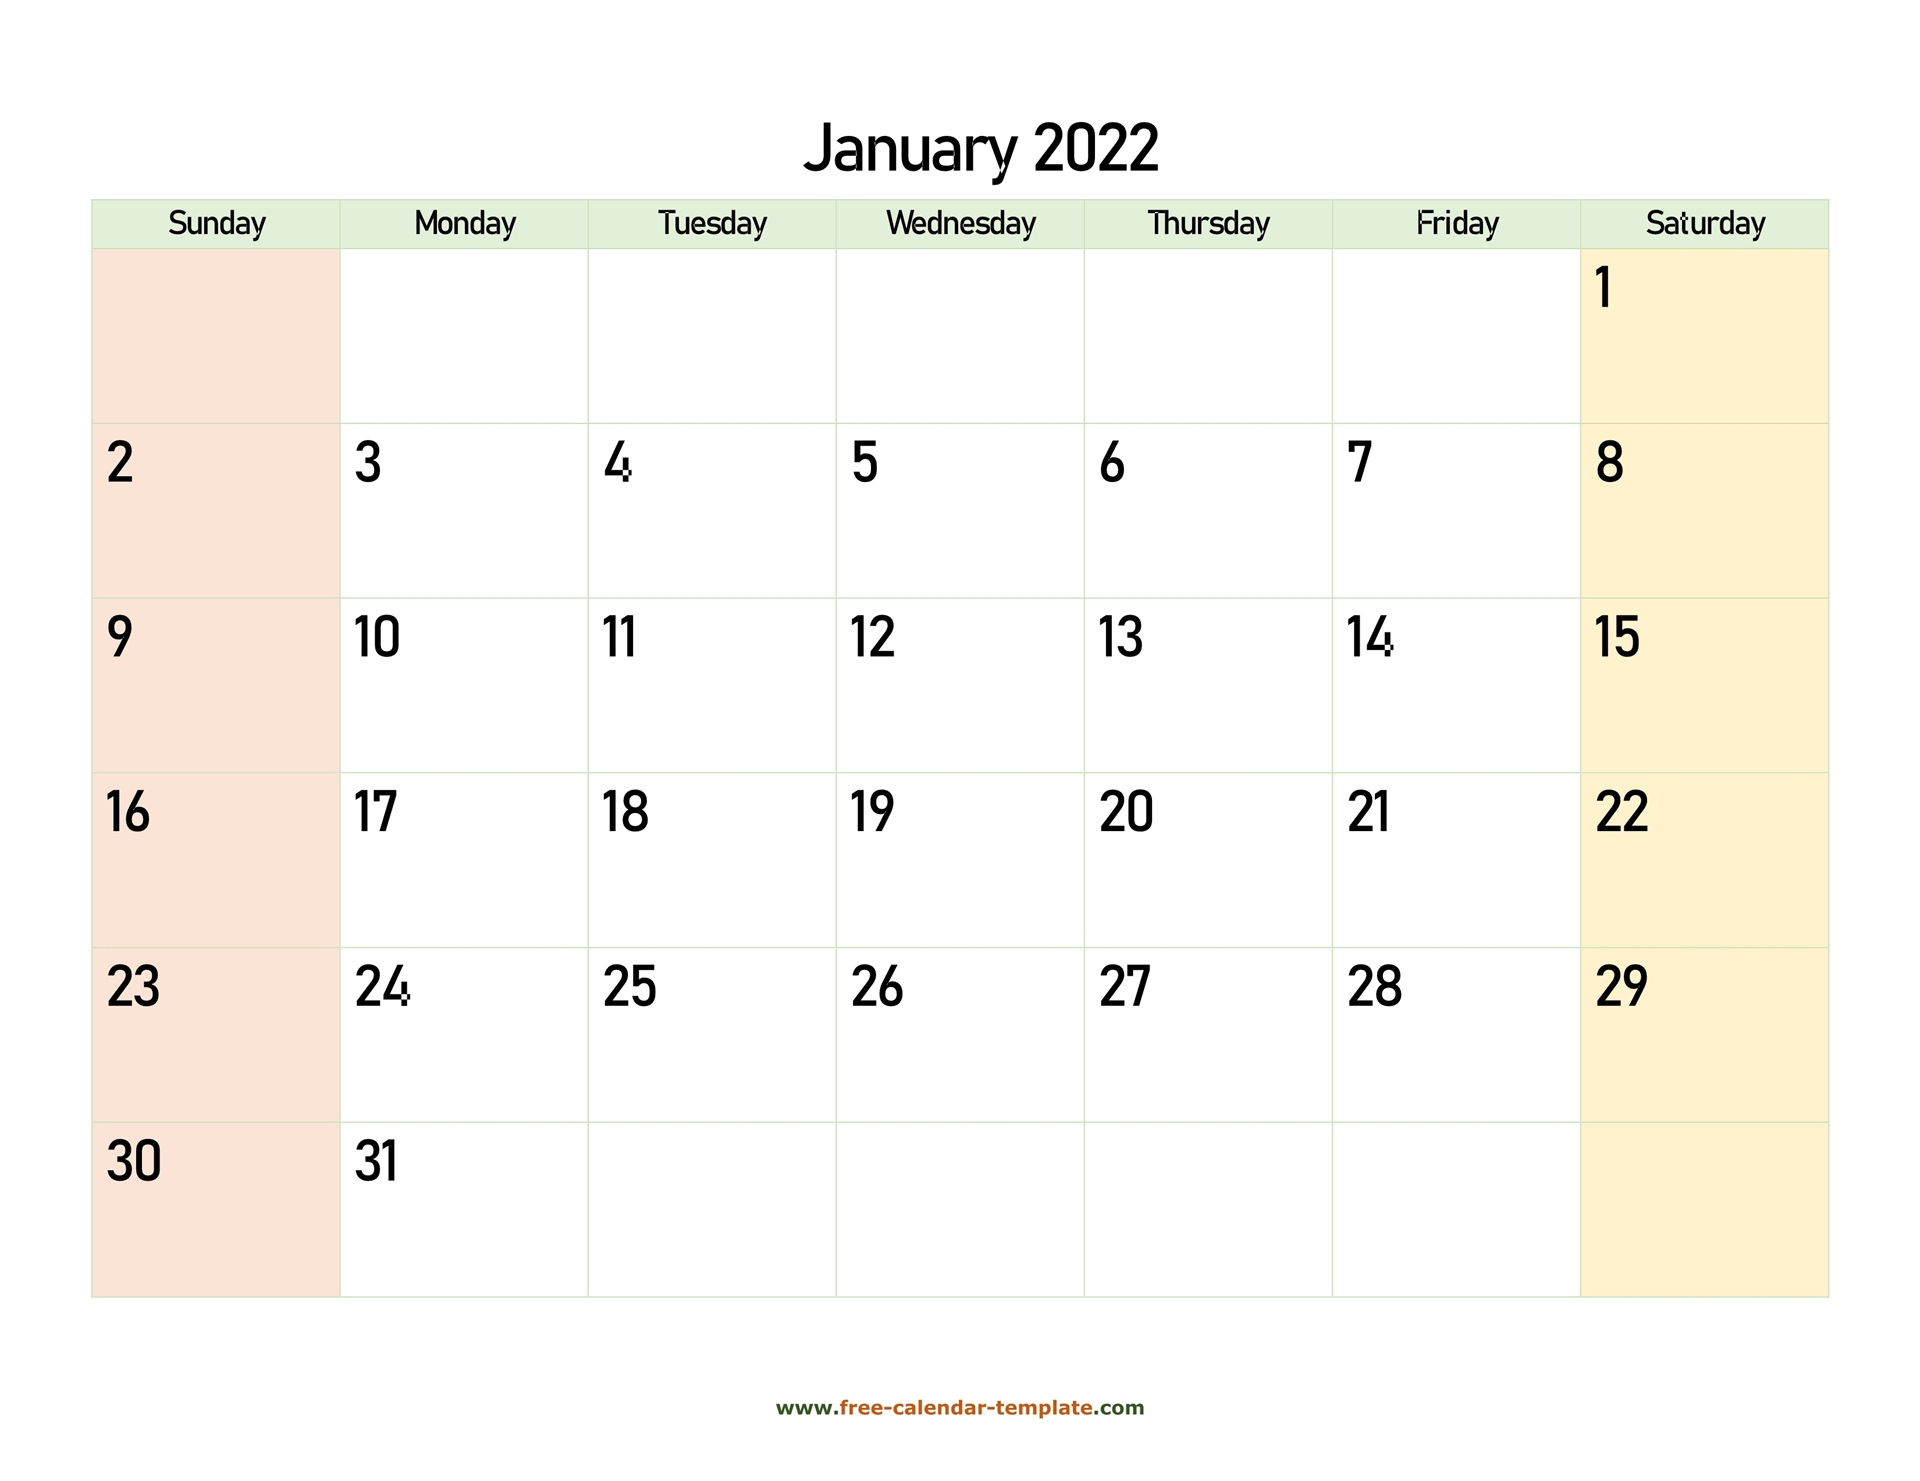 January 2022 Free Calendar Tempplate | Free-Calendar